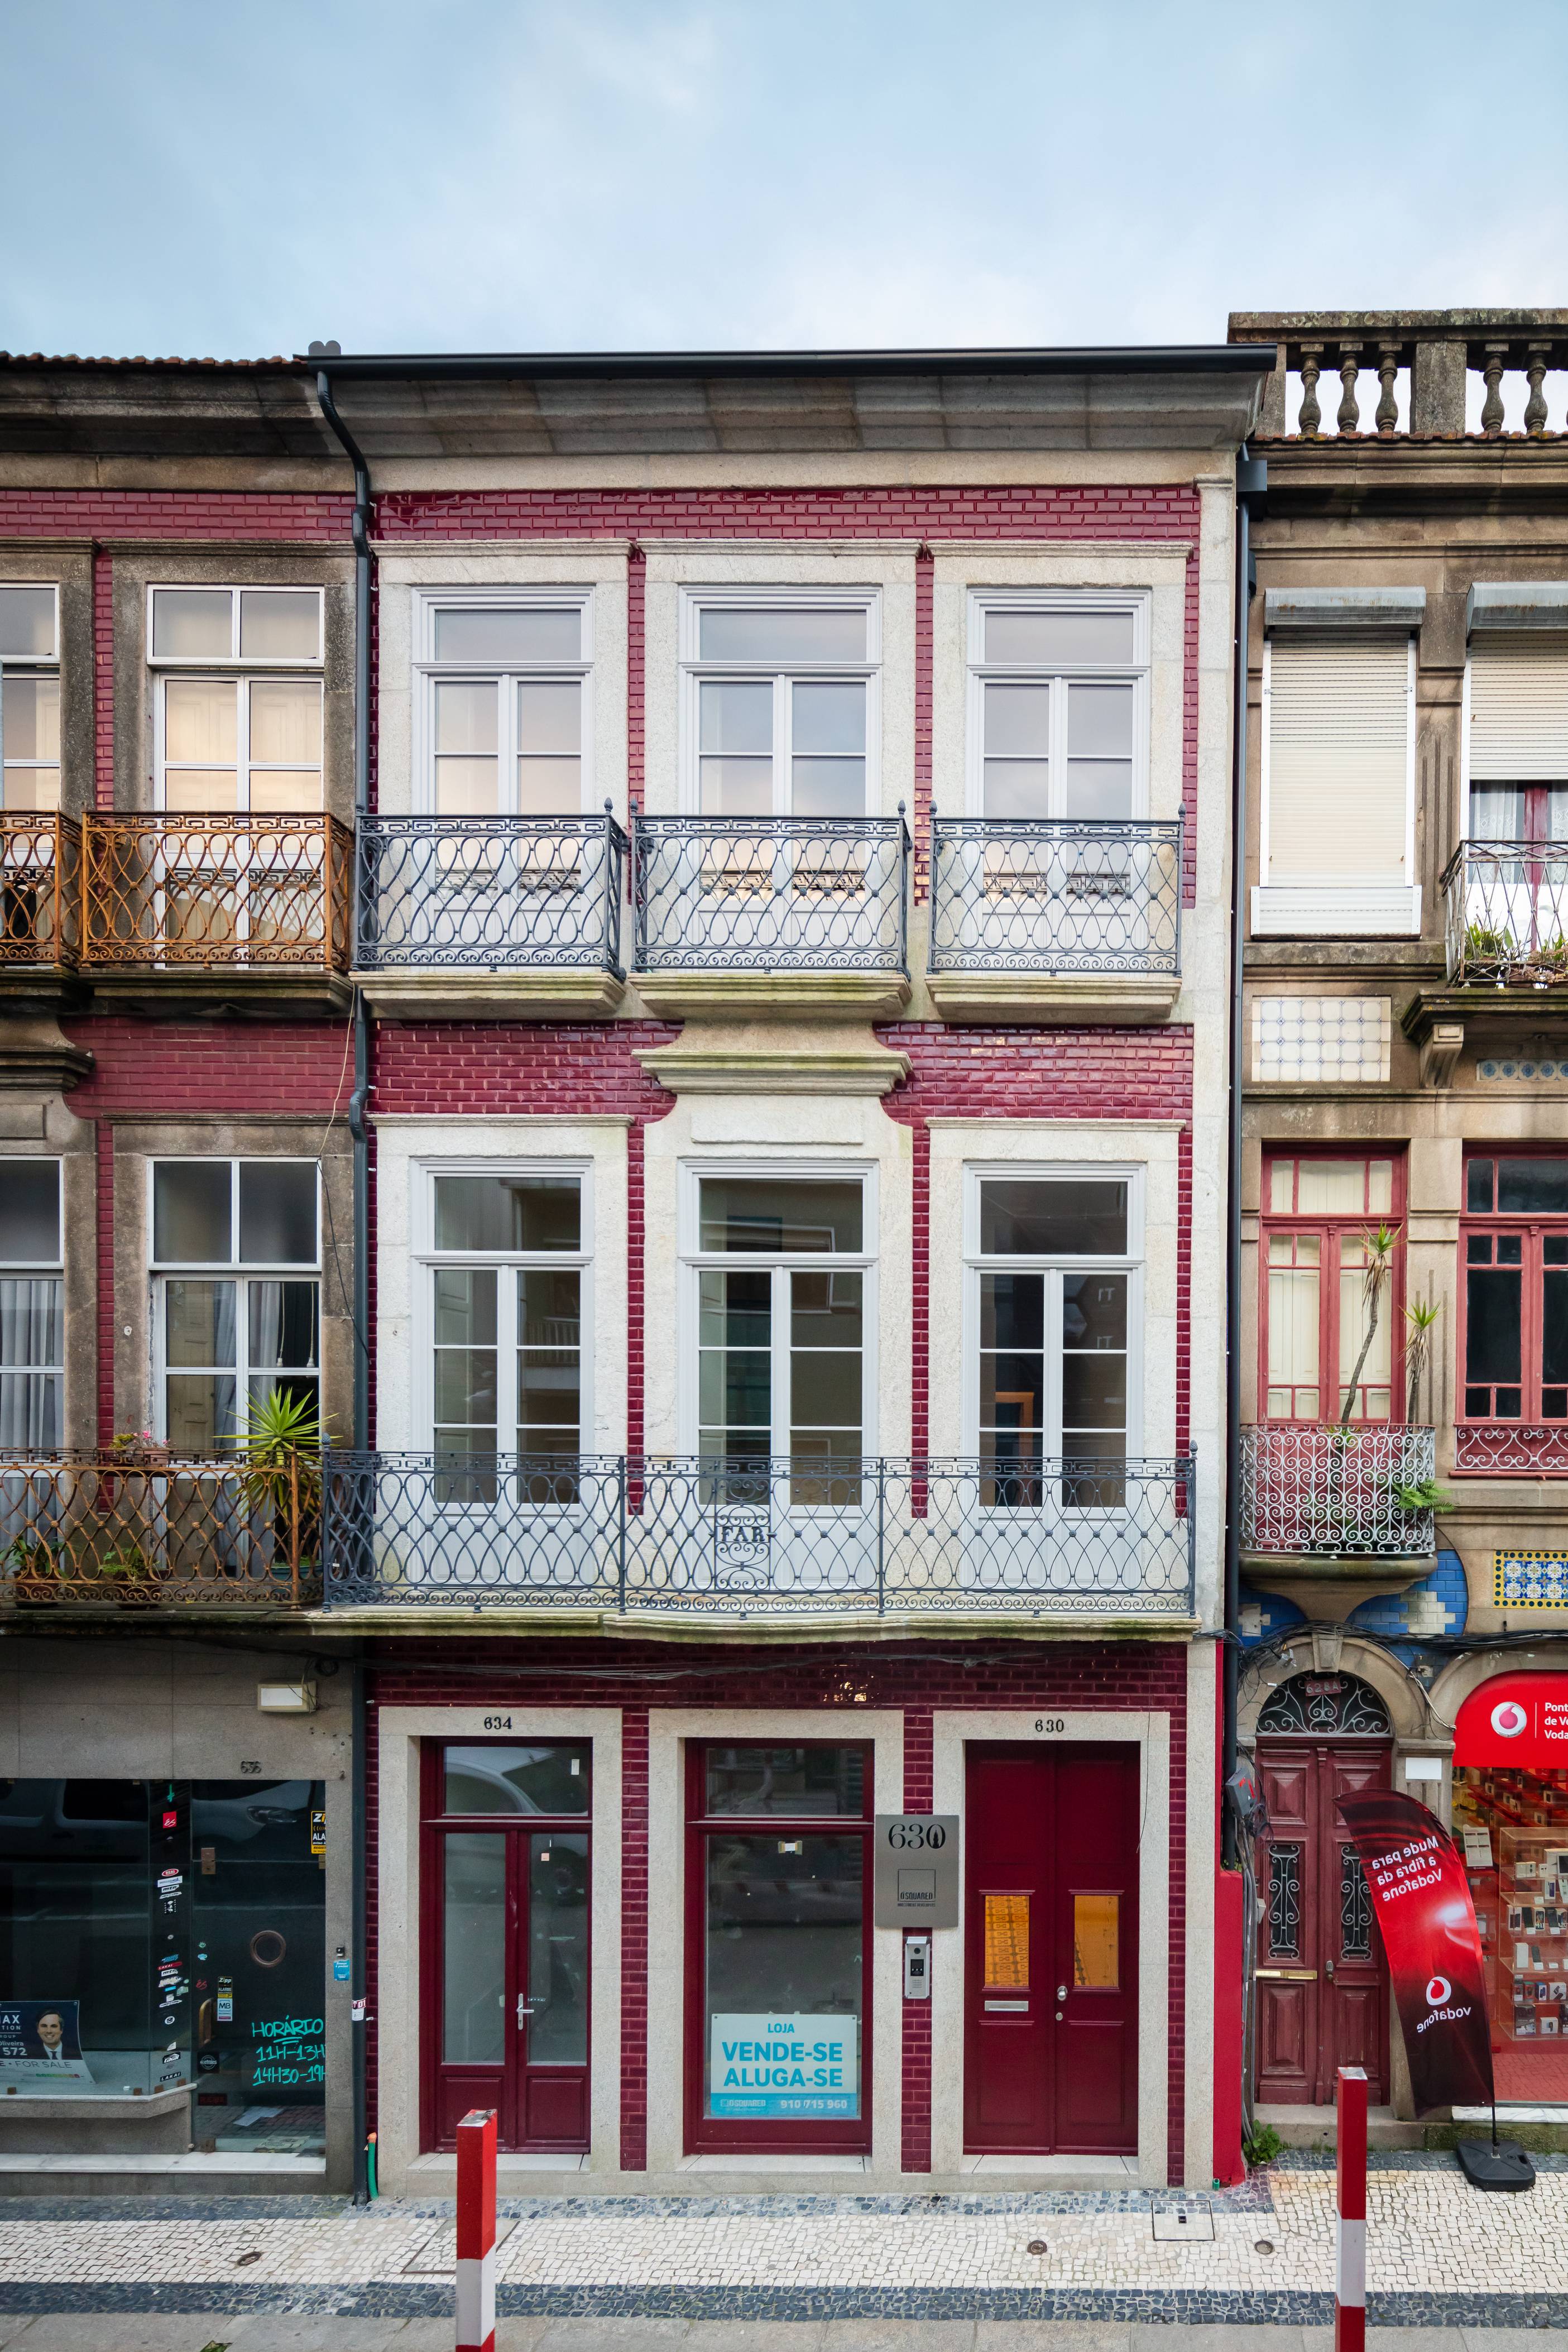 Amazing 1 + 1 bedroom duplex Apartment | Prime Location in Porto, Portugal.